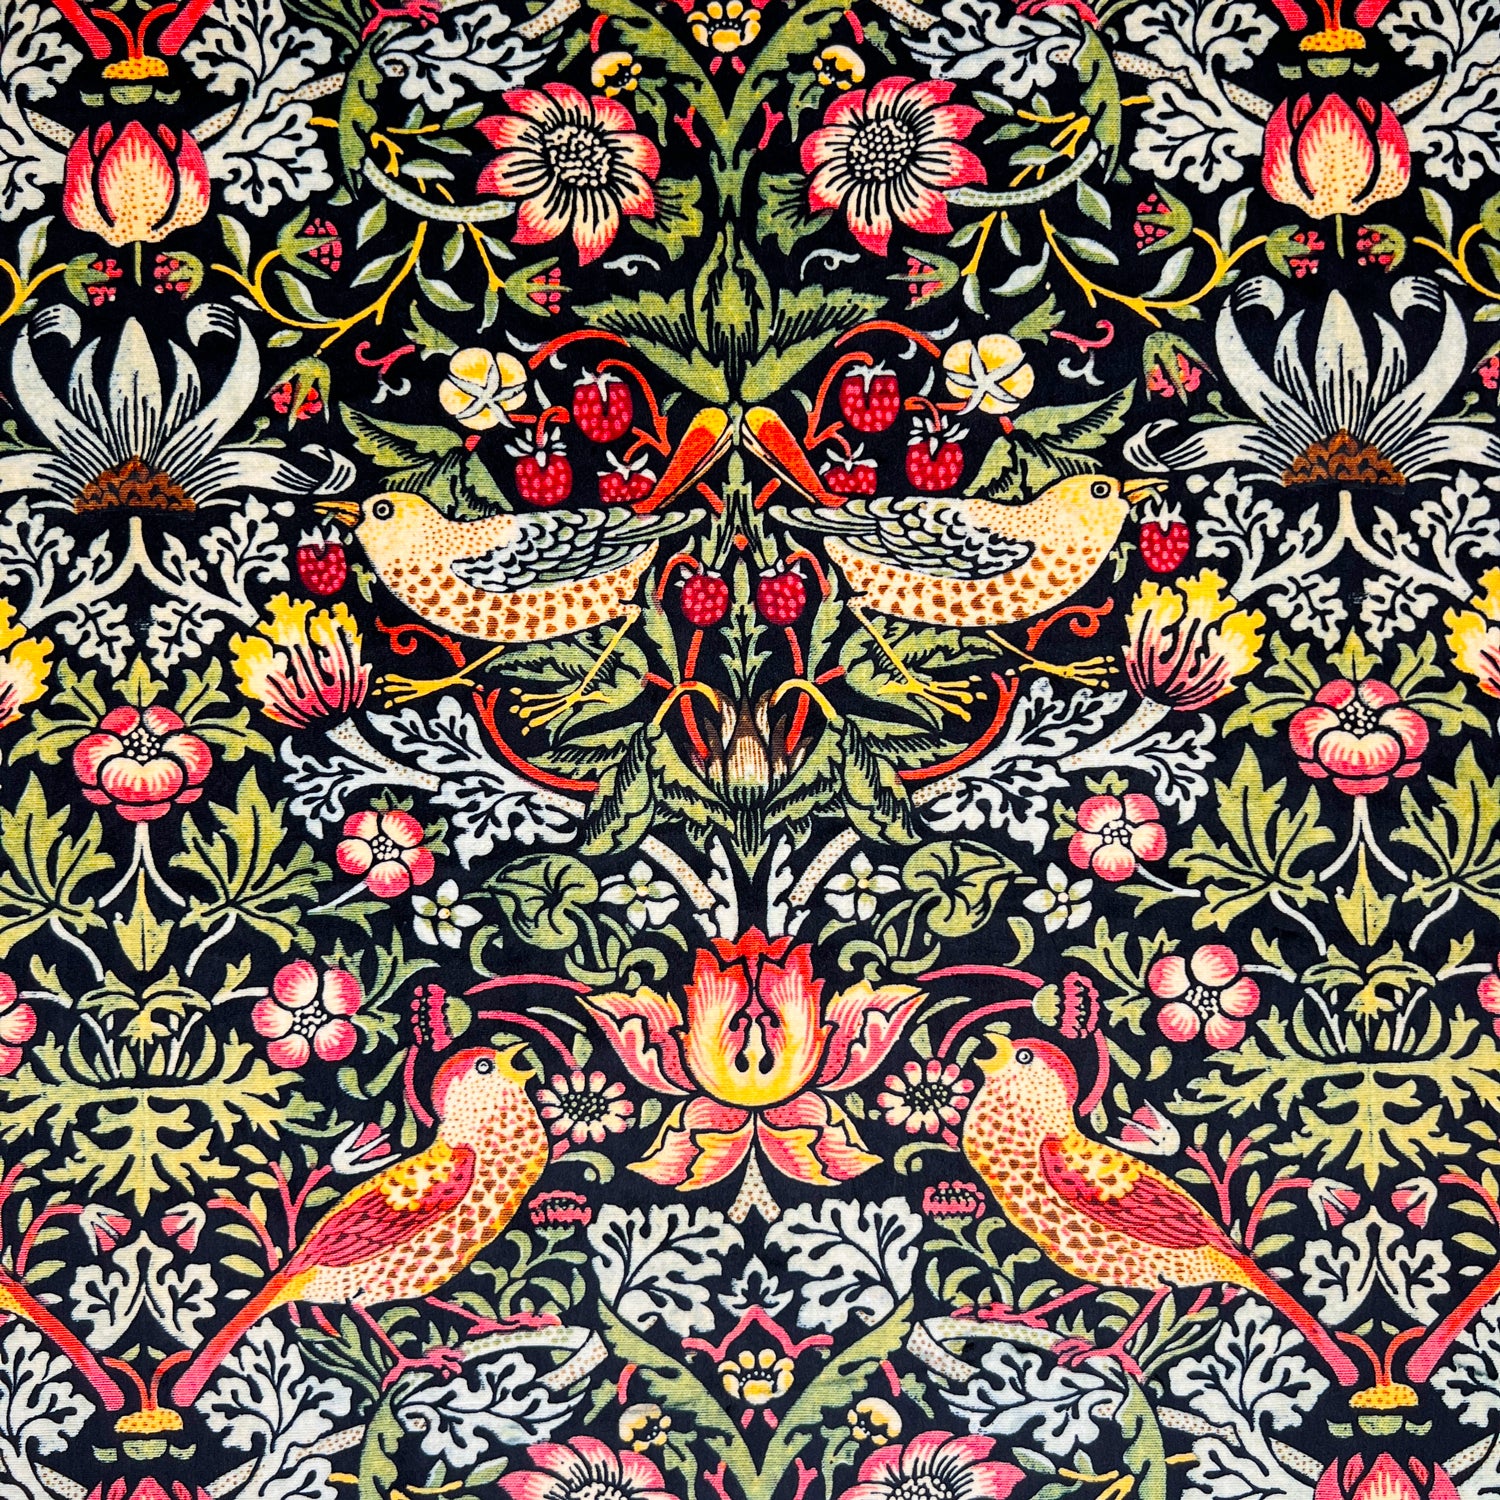 Tapestry Fabric - William Morris Black Strawberry Thief - Luxury